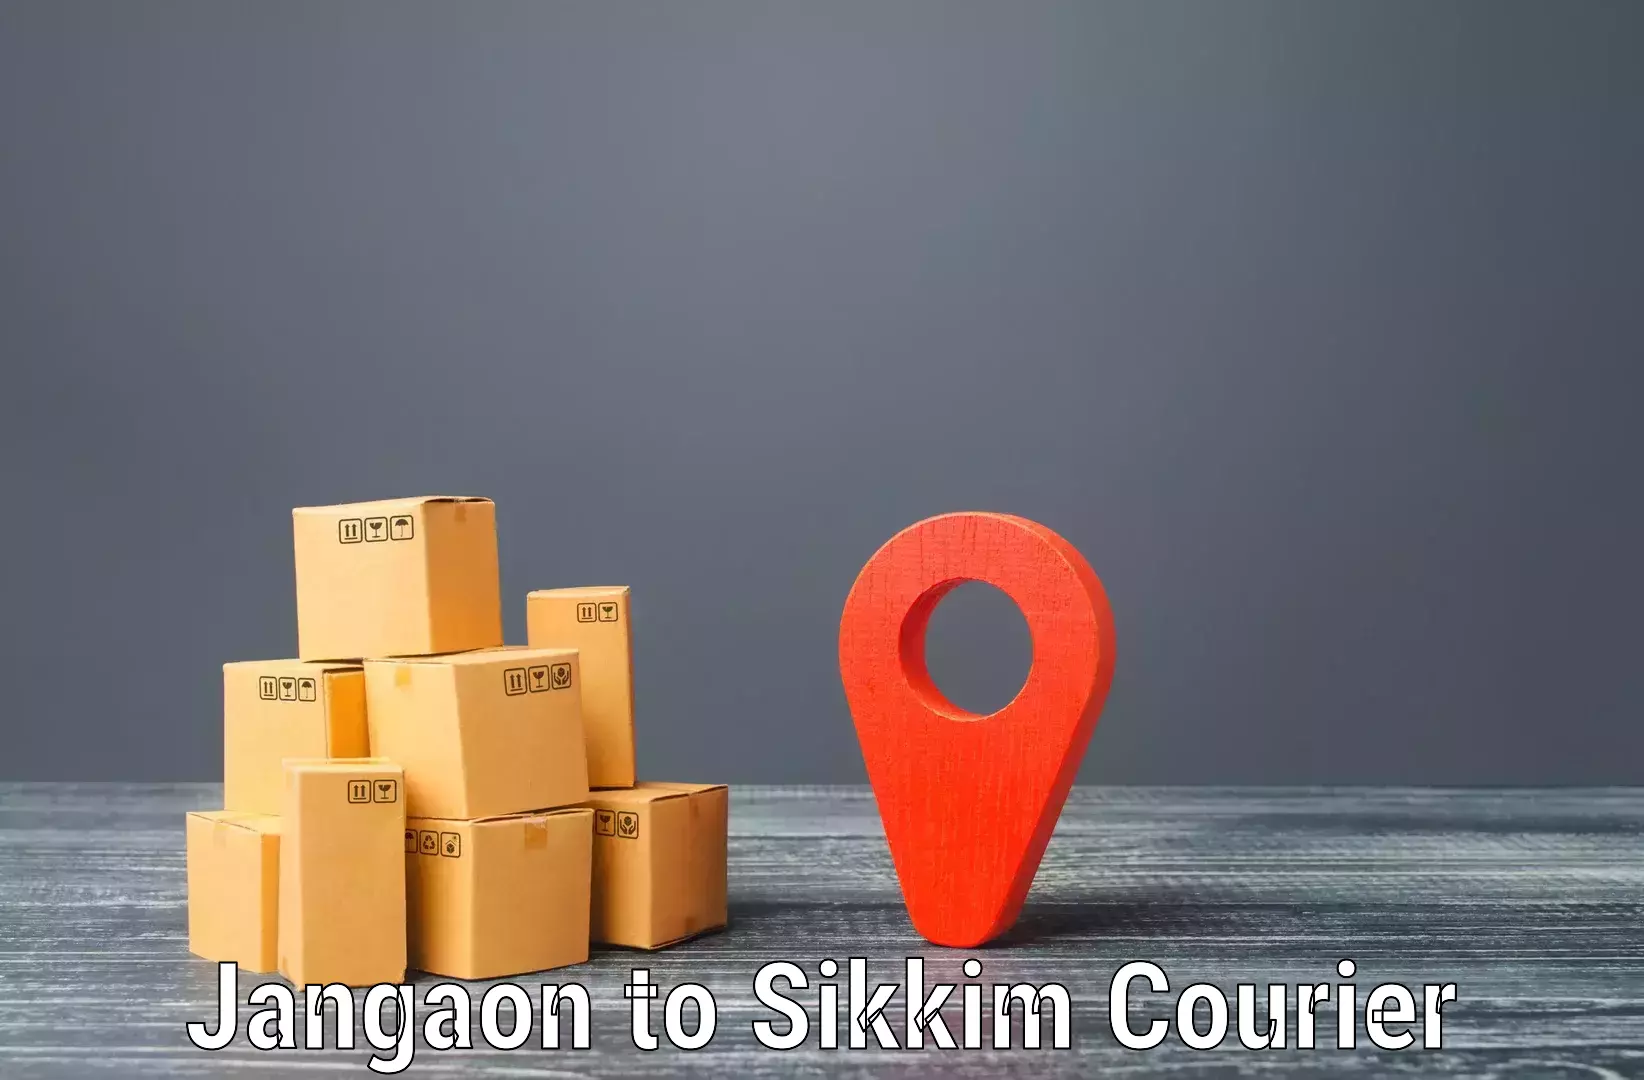 High-capacity parcel service Jangaon to North Sikkim